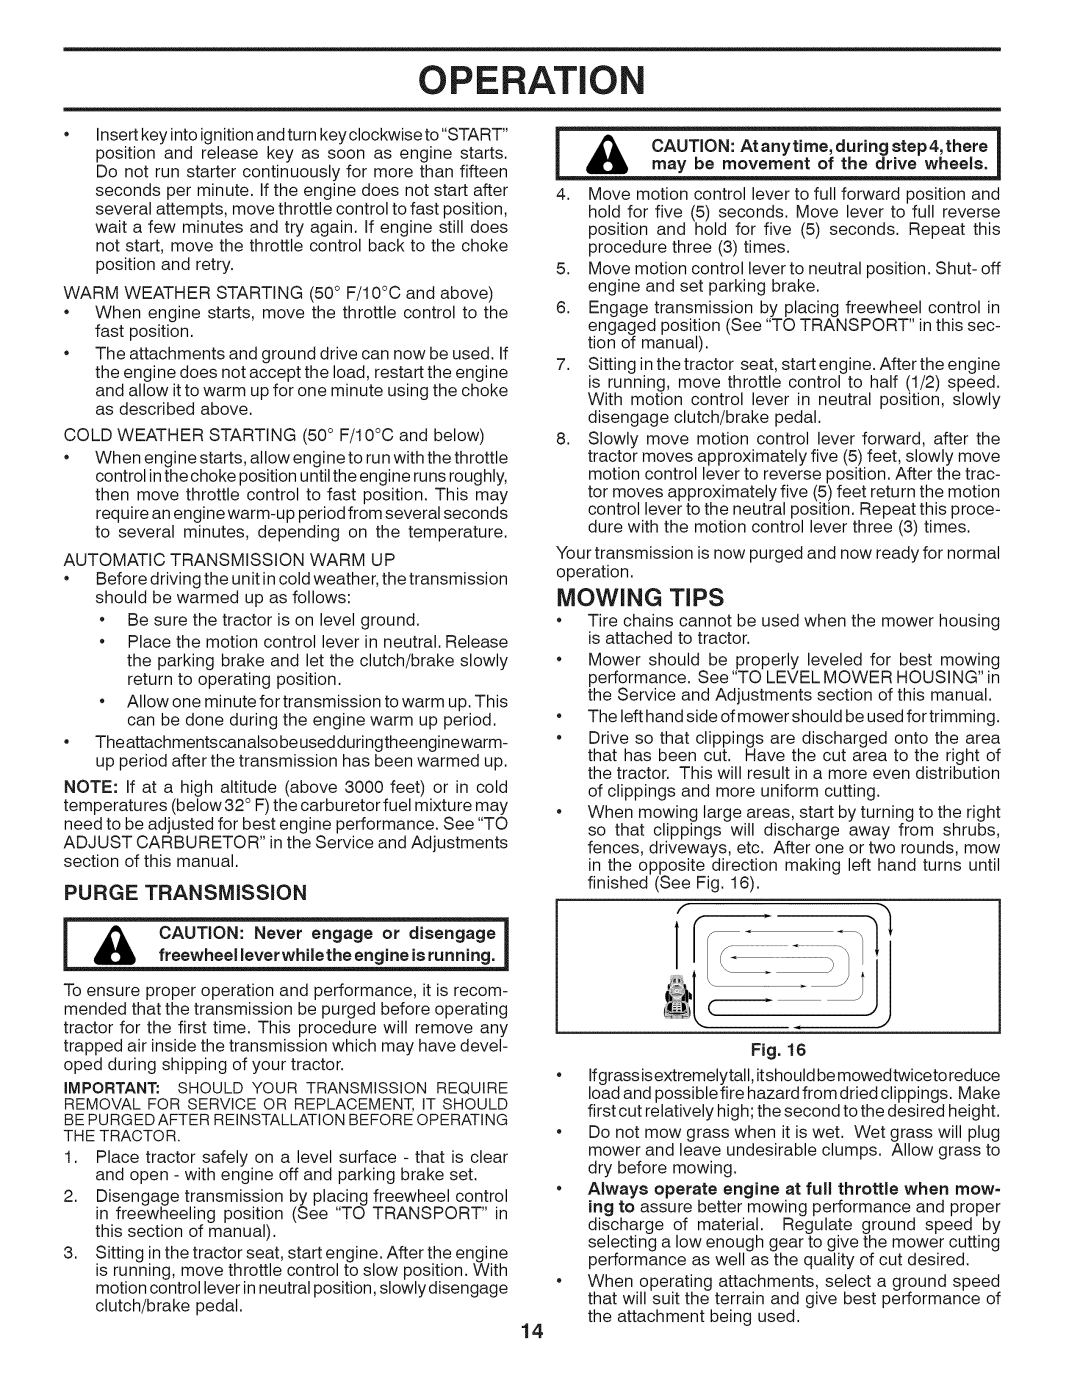 Husqvarna LTH18538 owner manual Mowing Tips, Operation, Purge Transmission 